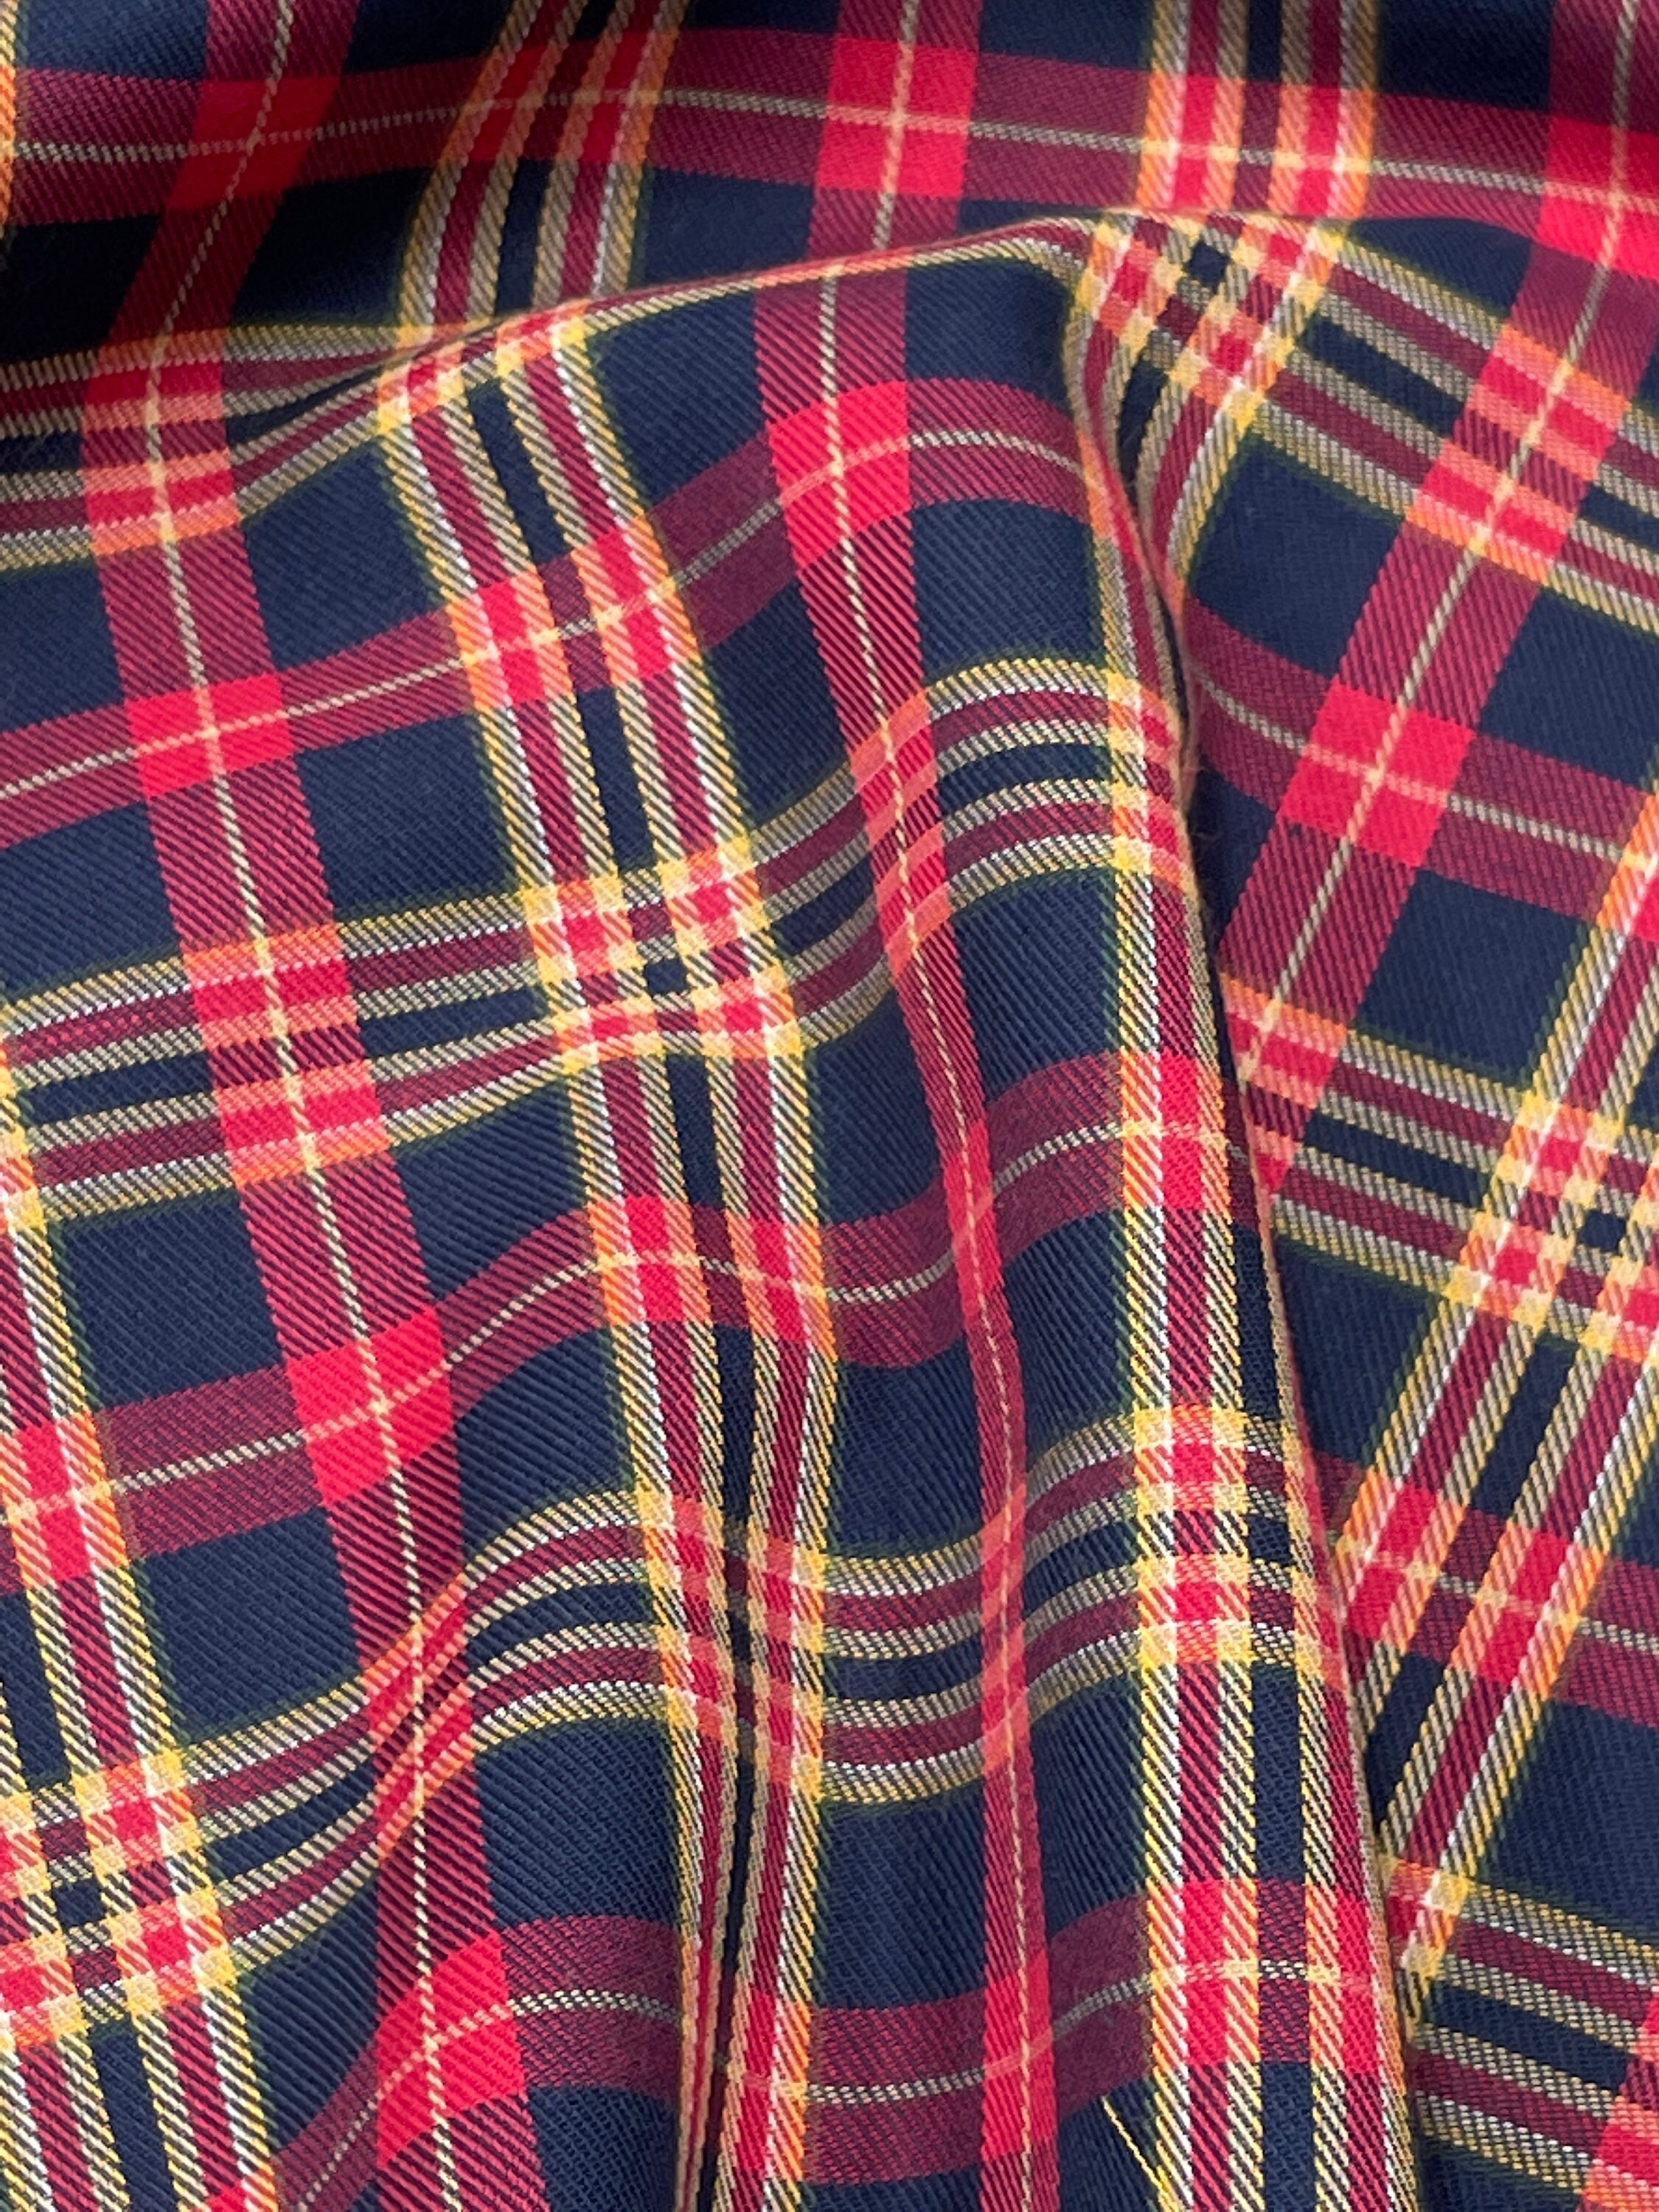 Woven Cotton Tartan Fabric, Red Yellow Navy Blue Plaid, Royal Stewart White  Check, for Shirt, Dress, Blazer, by 2.0 Meter -  Singapore